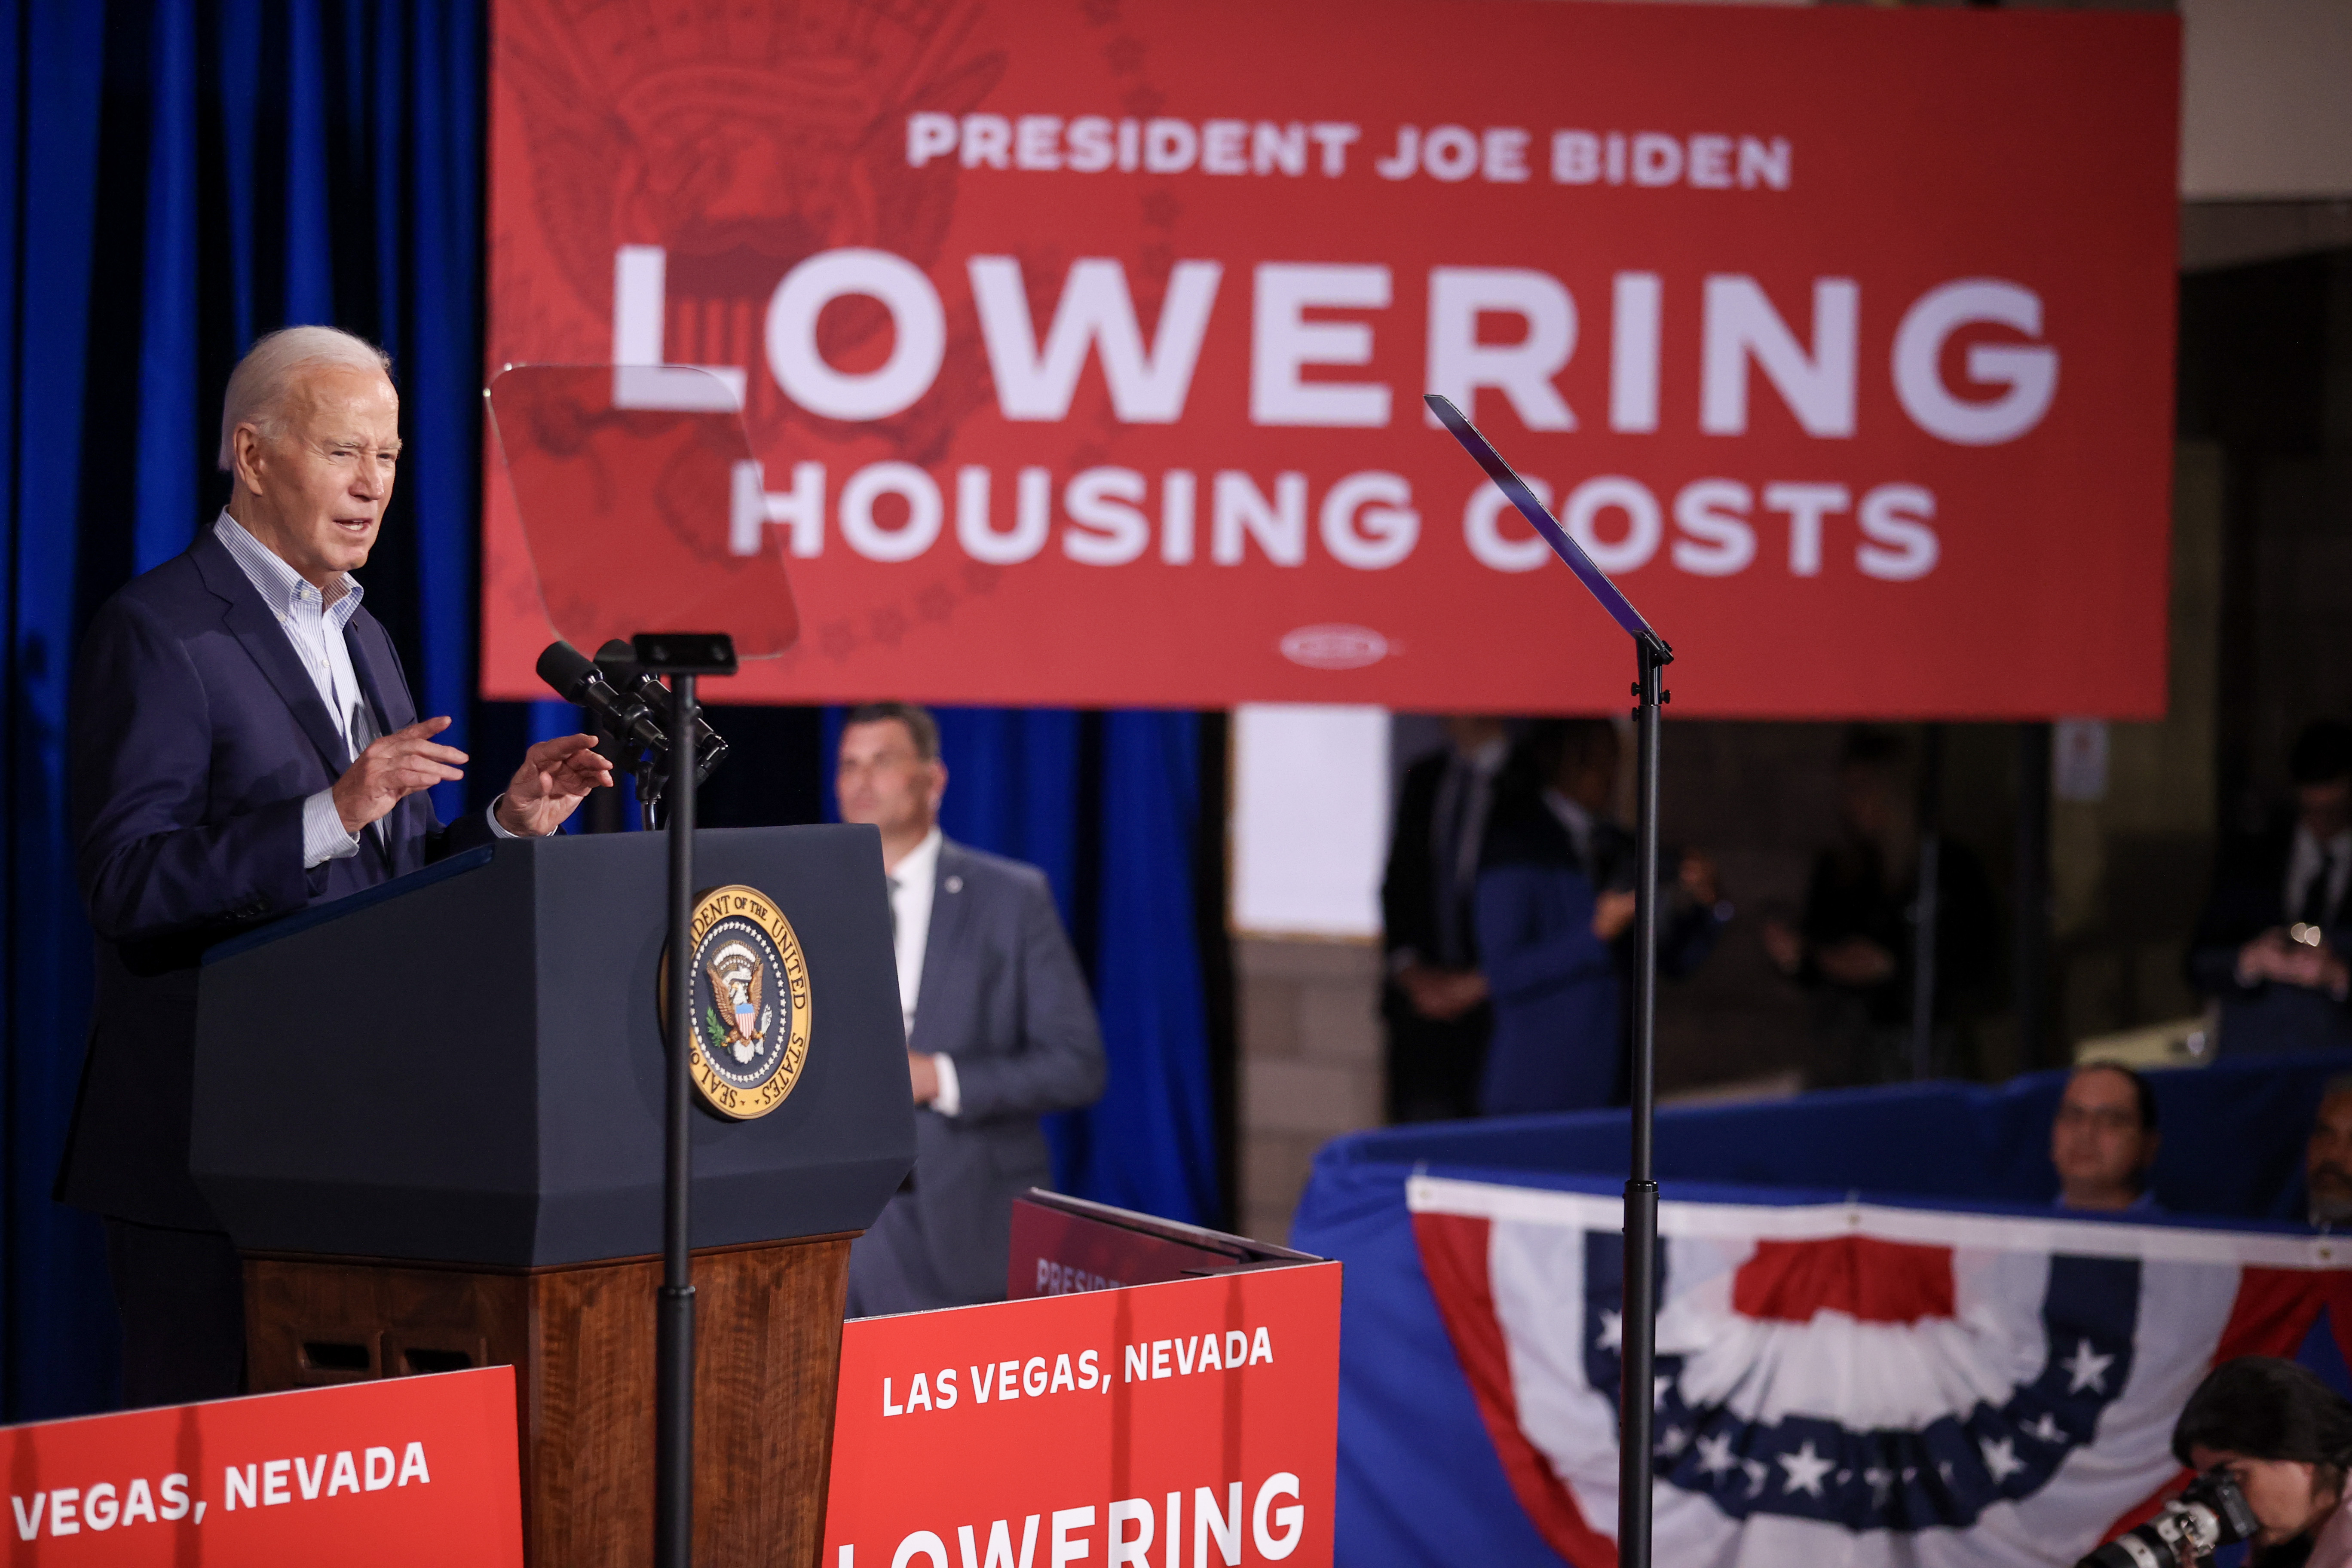 Biden speaks at a podium. Behind him, a large red banner reads: President Joe Biden: Lowering Housing Costs.